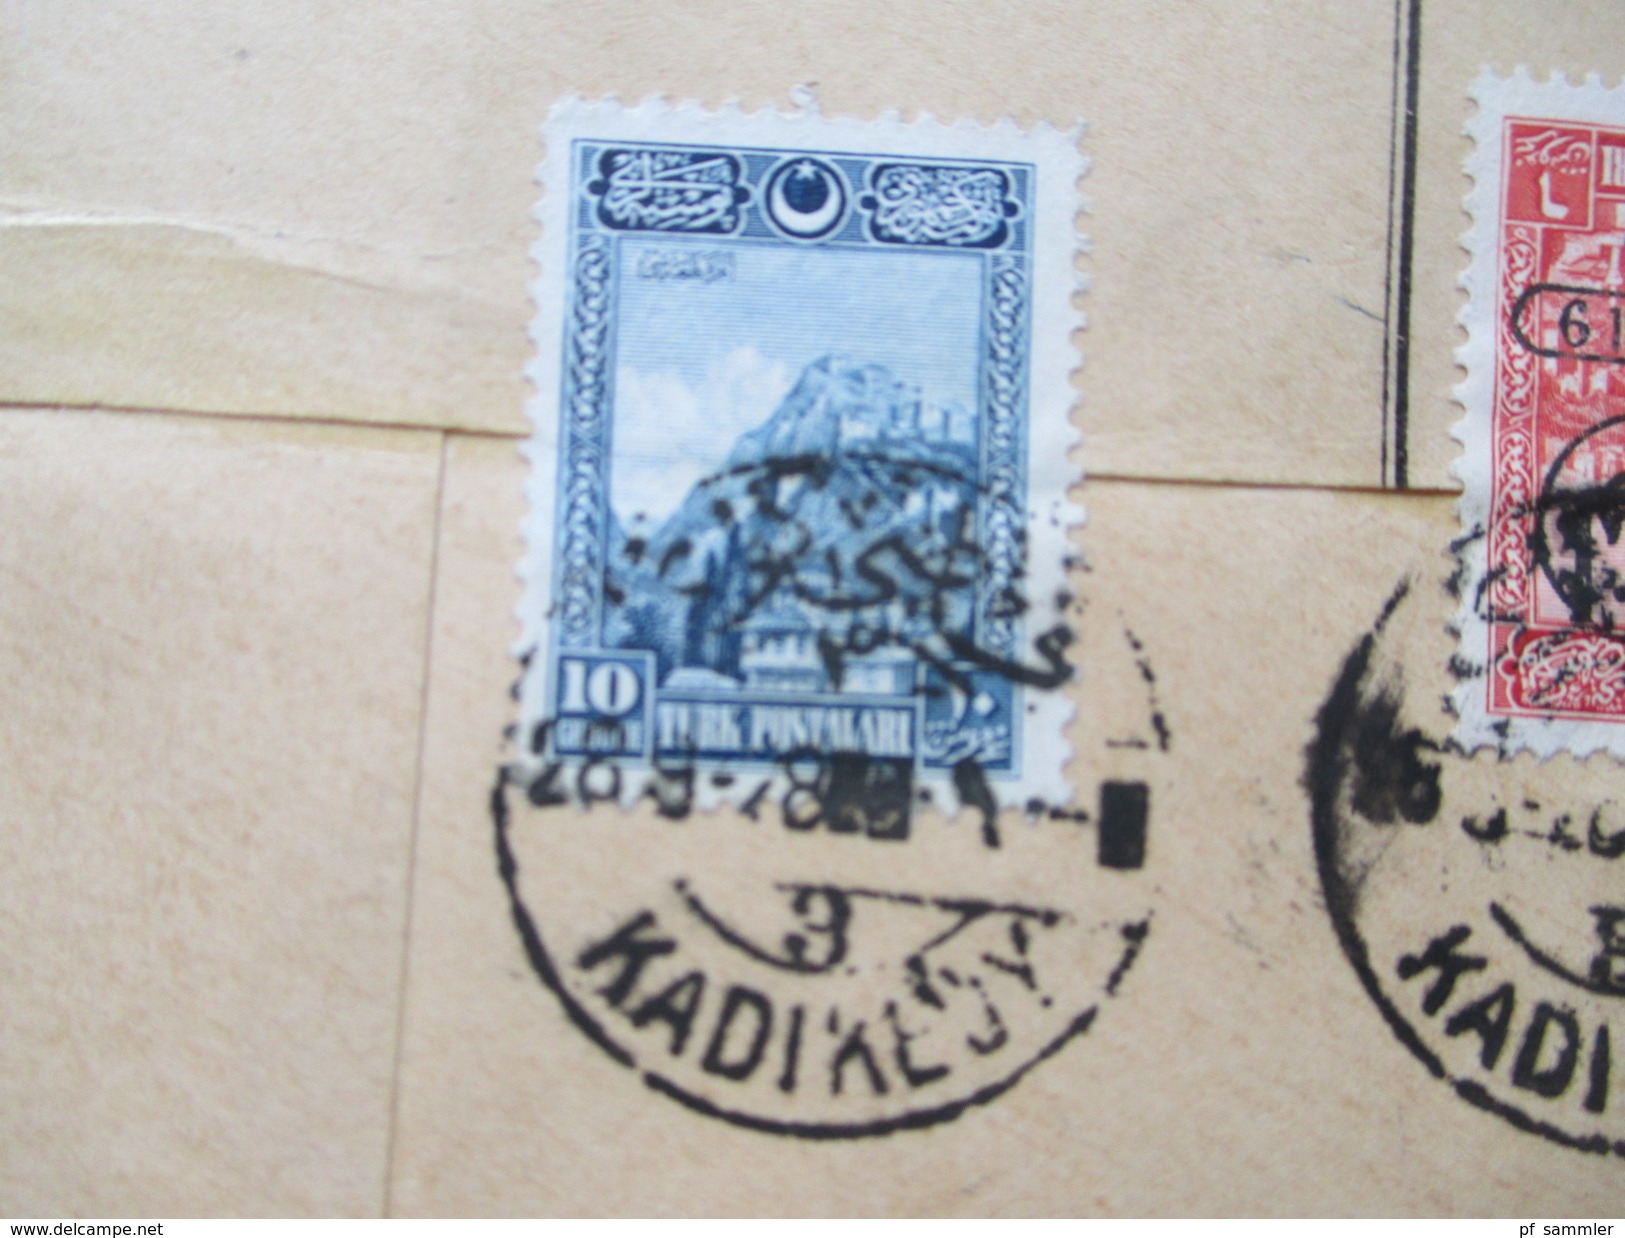 Türkei 1928 R-Brief R-Zettel St. Kadikeuy 515 / Kadikoy! Nr. 875 Smyrna Aufdruck MiF. RRR?!? nach Wien!